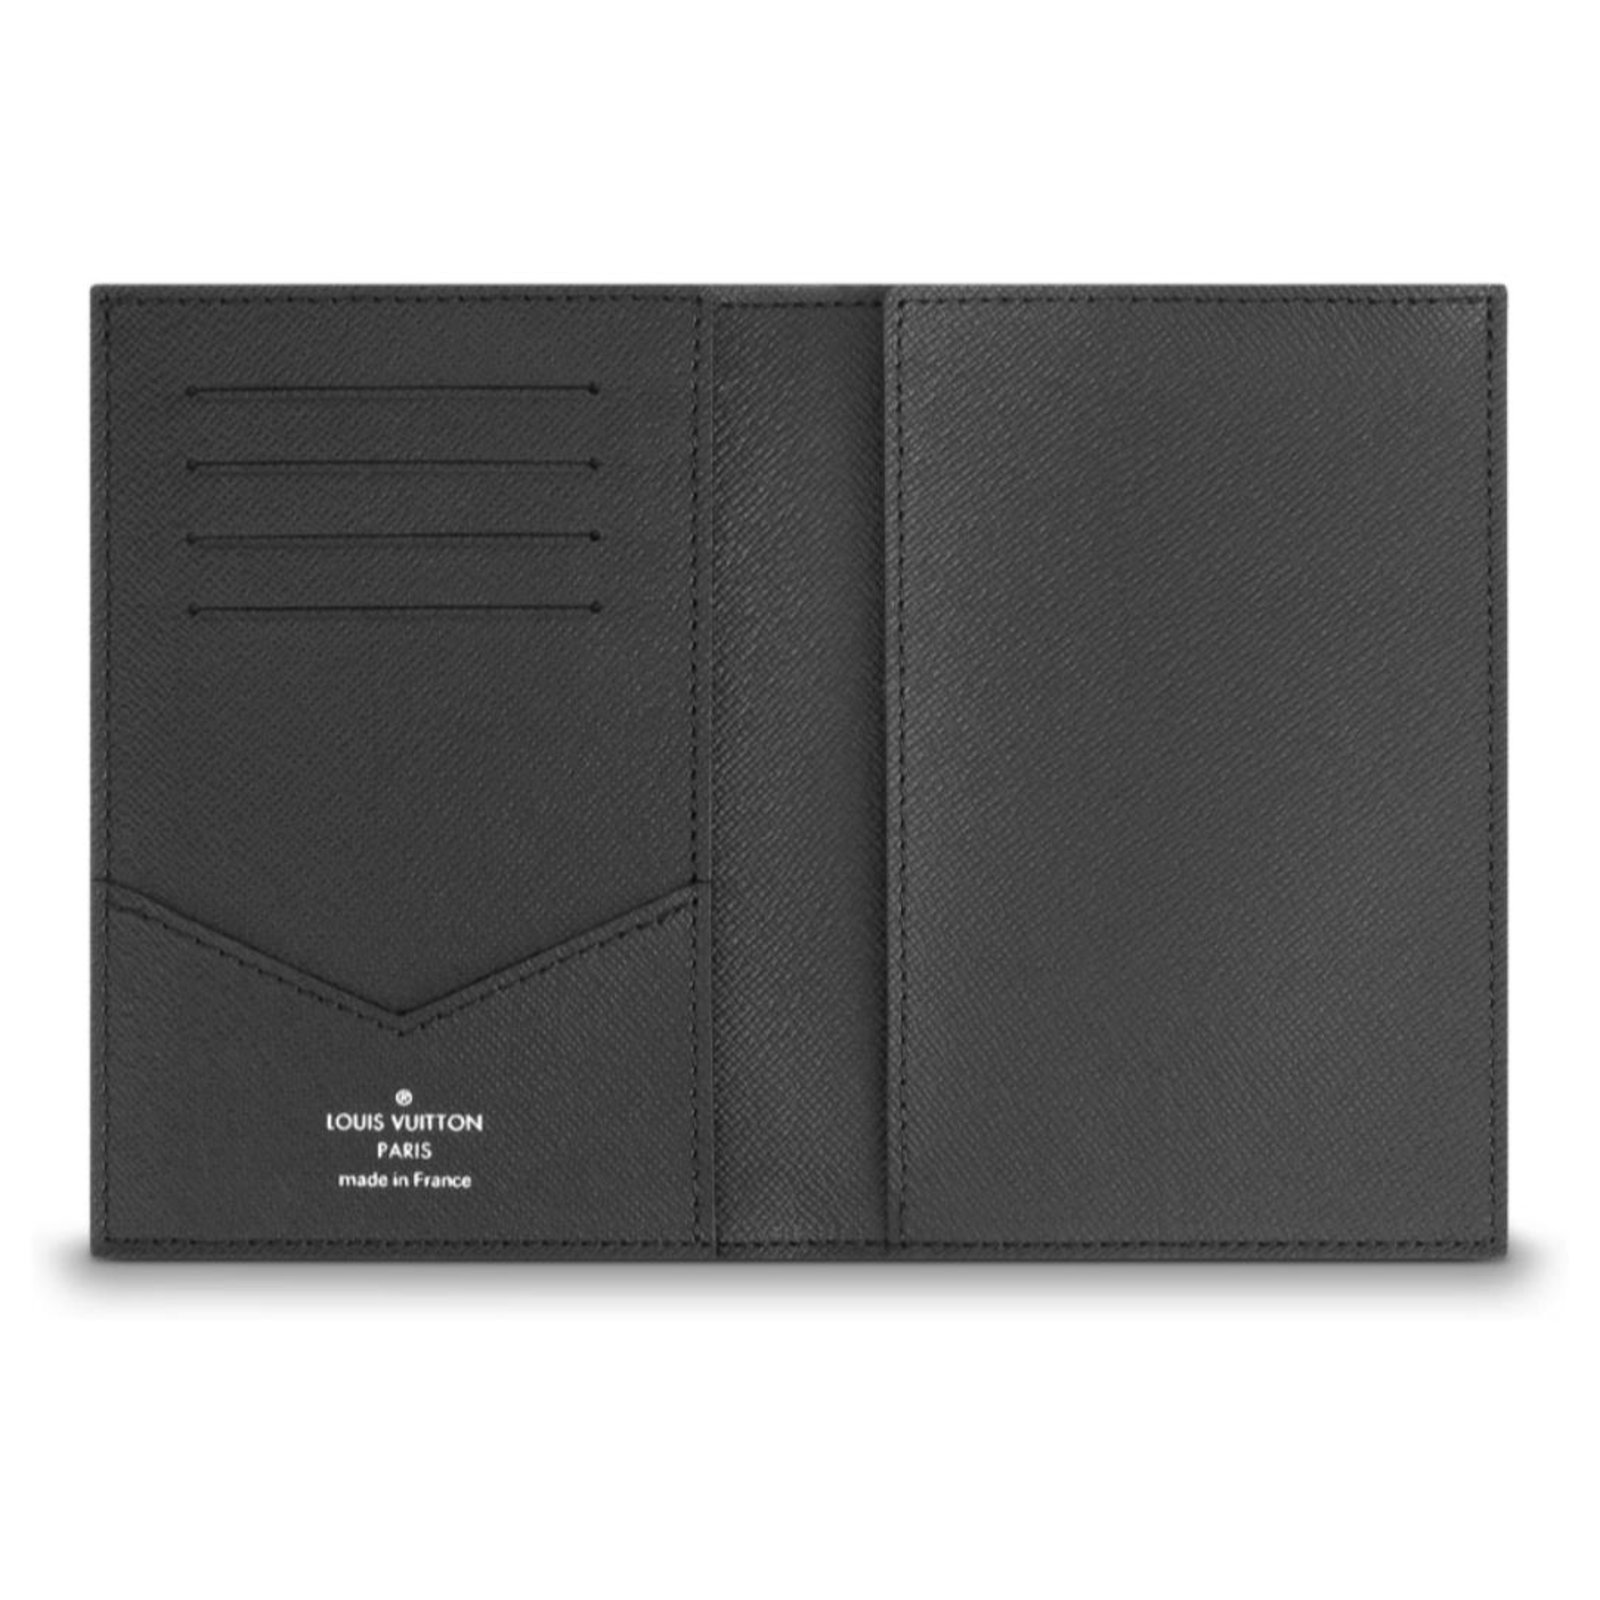 Louis Vuitton M82721 Flight Mode Passport Cover, Grey, One Size